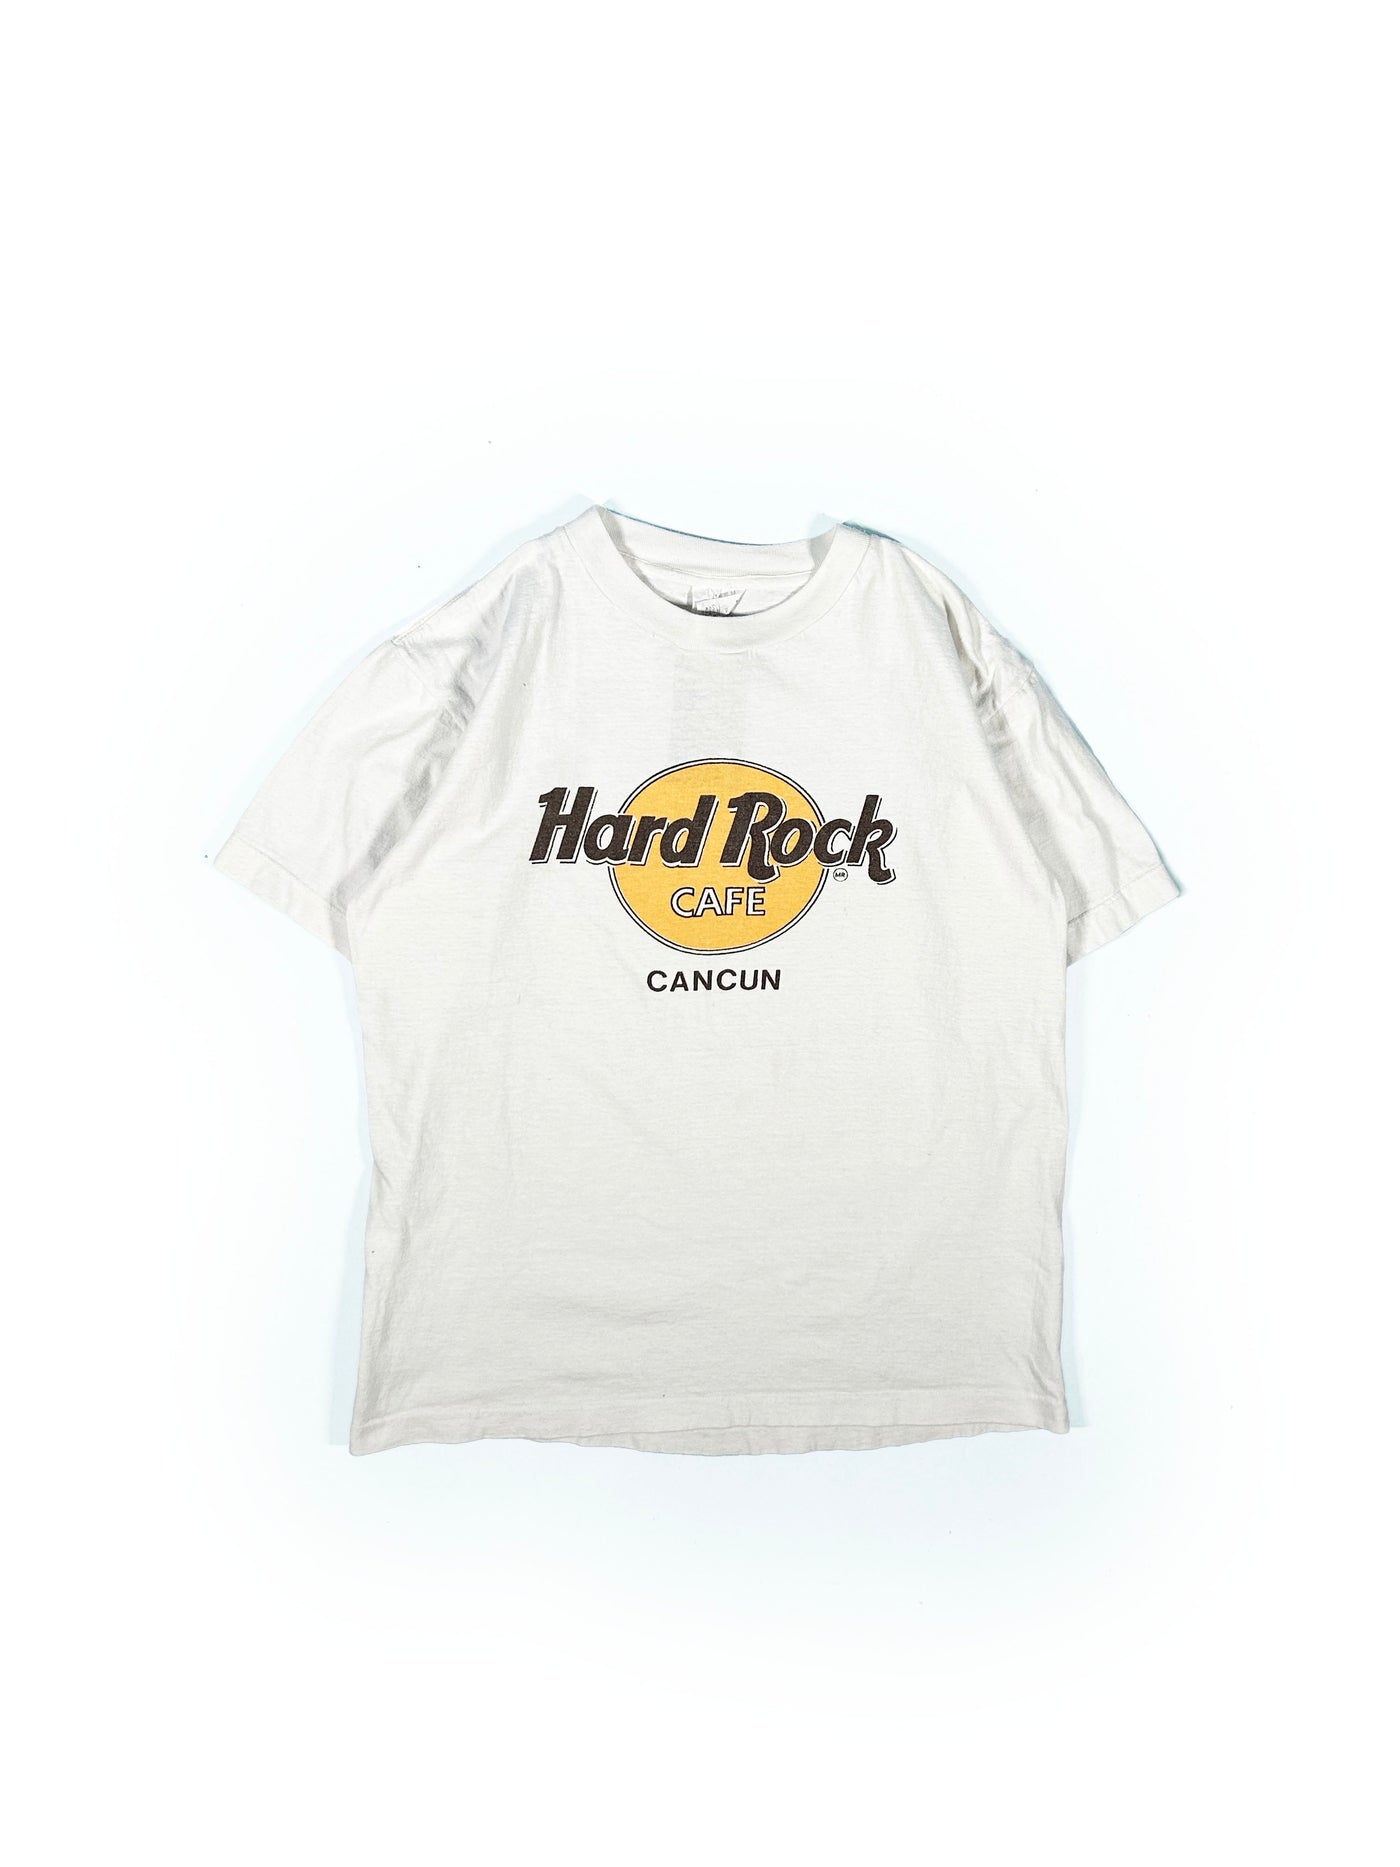 Vintage 90s Hard Rock Cafe Cancun T-Shirt